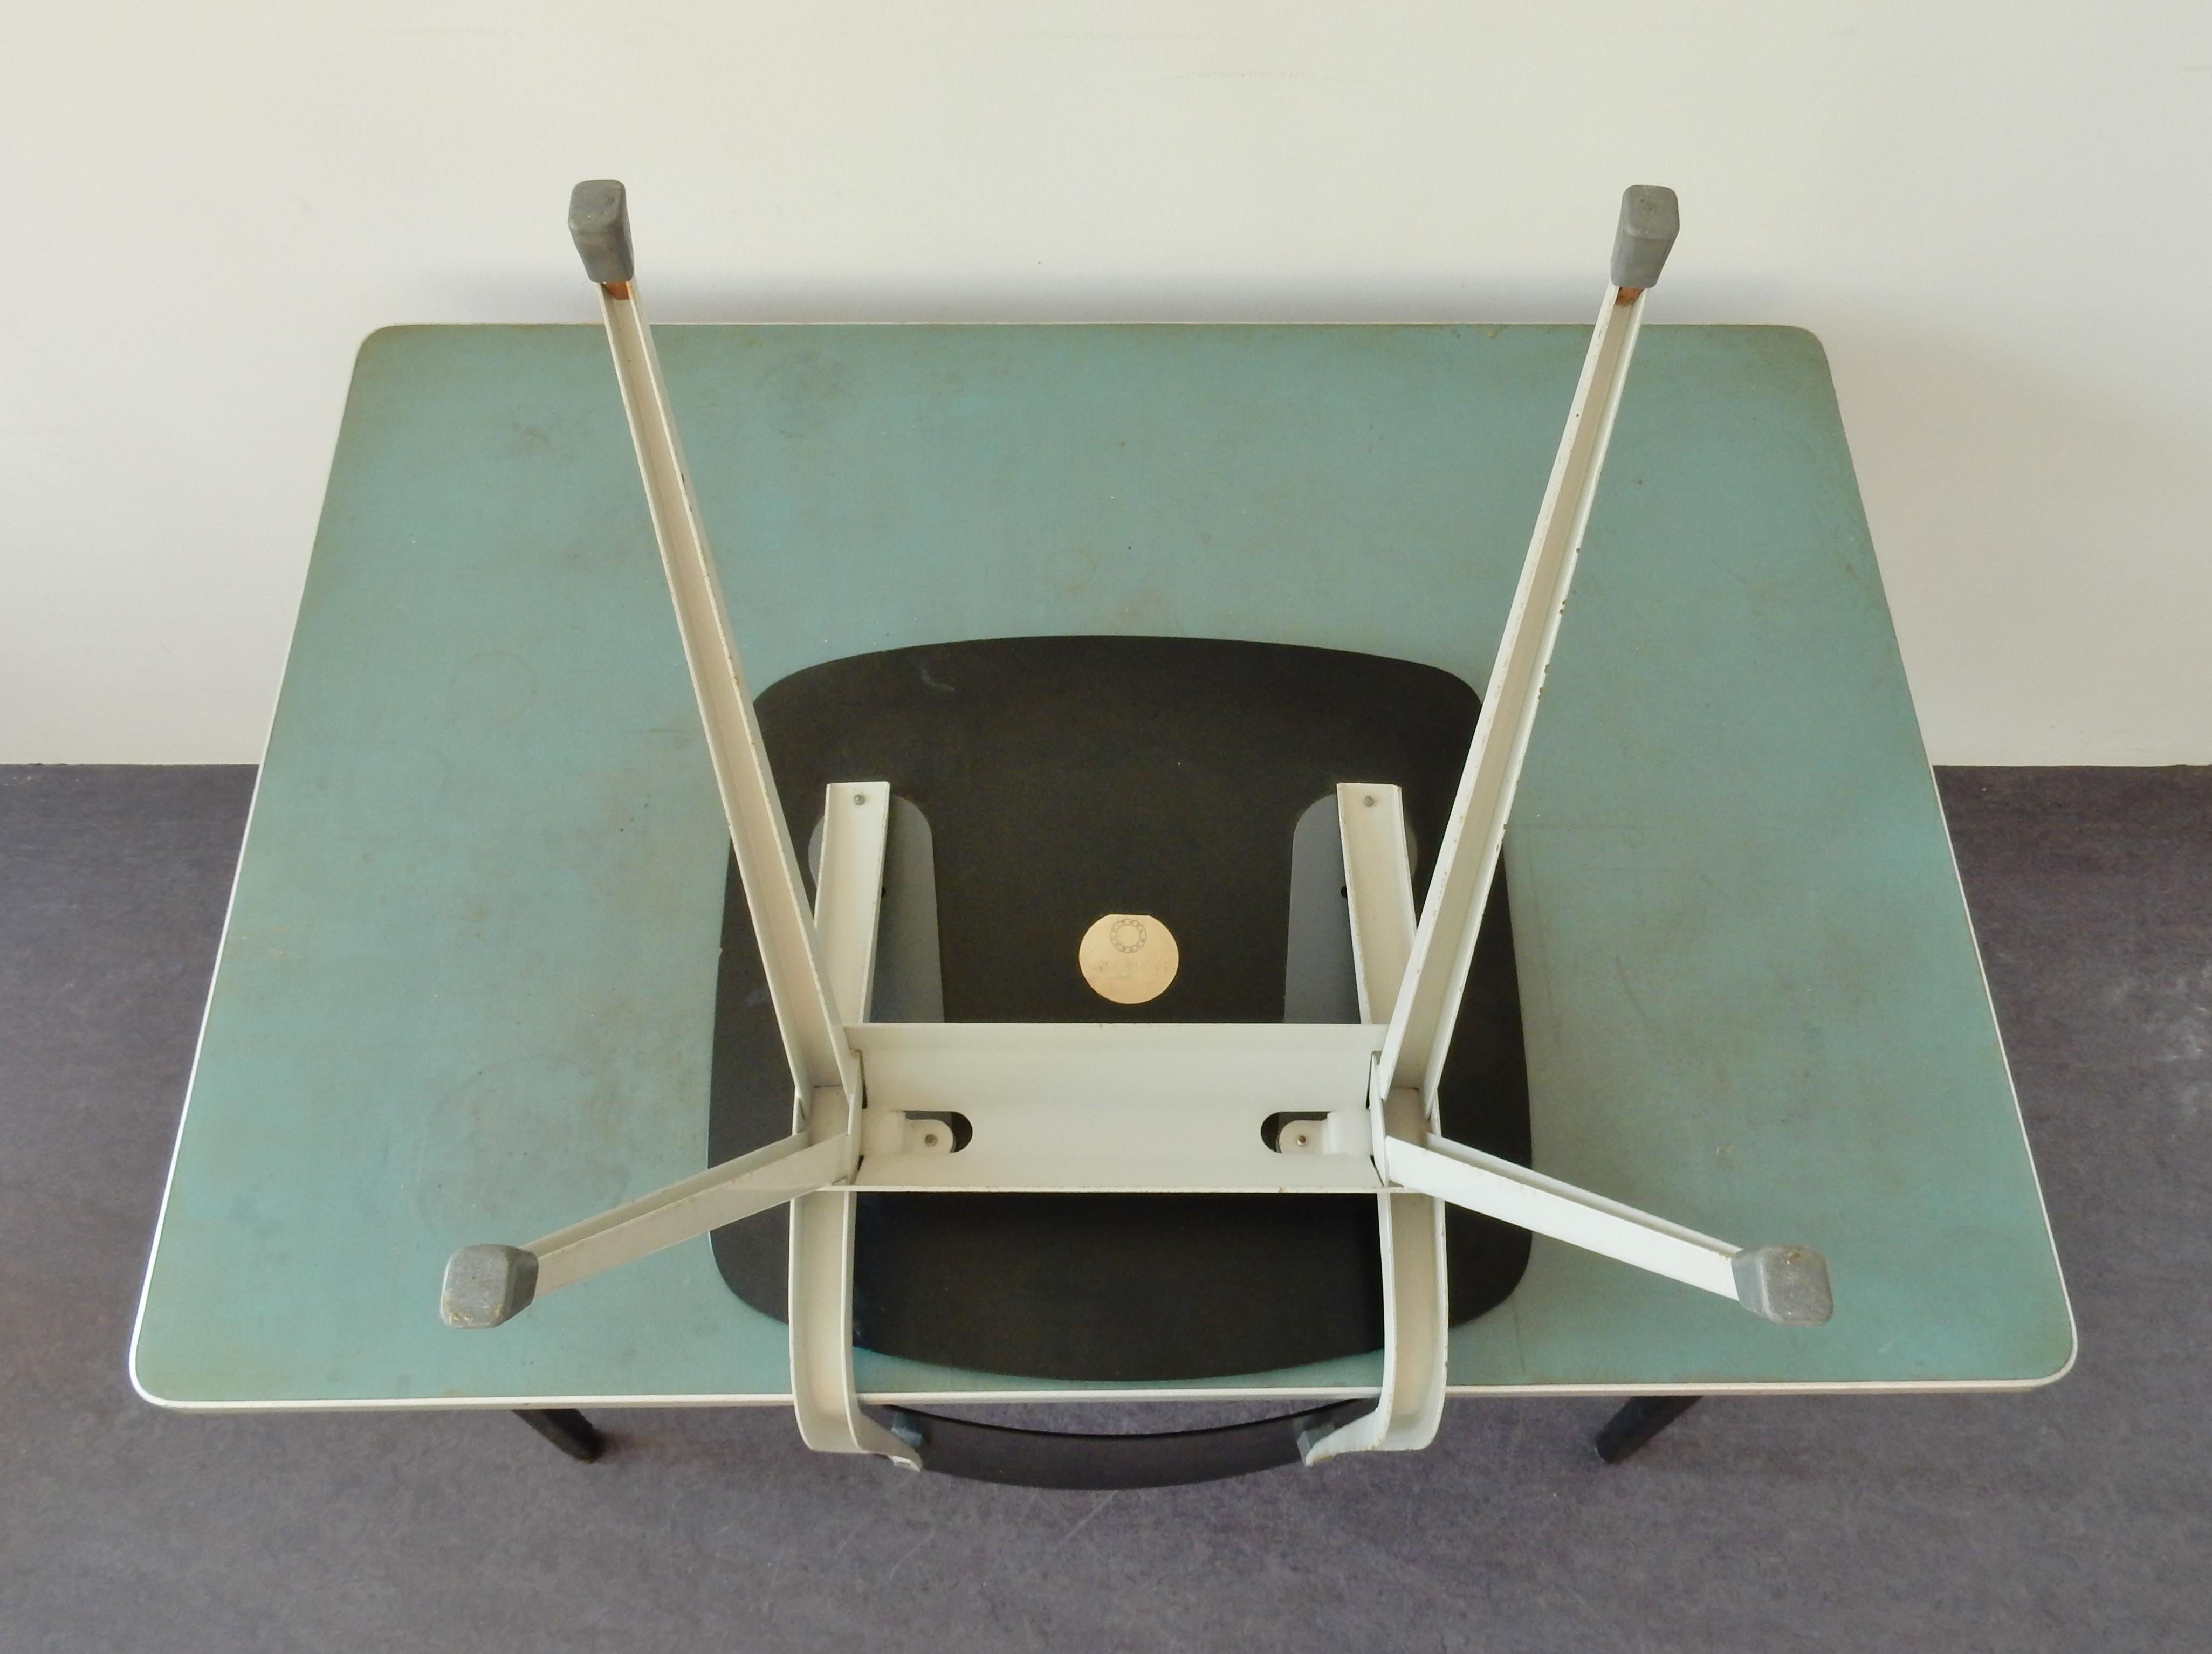 Pressed Small Industrial Desk Table Set by Friso Kramer for Ahrend de Cirkel, 1950s